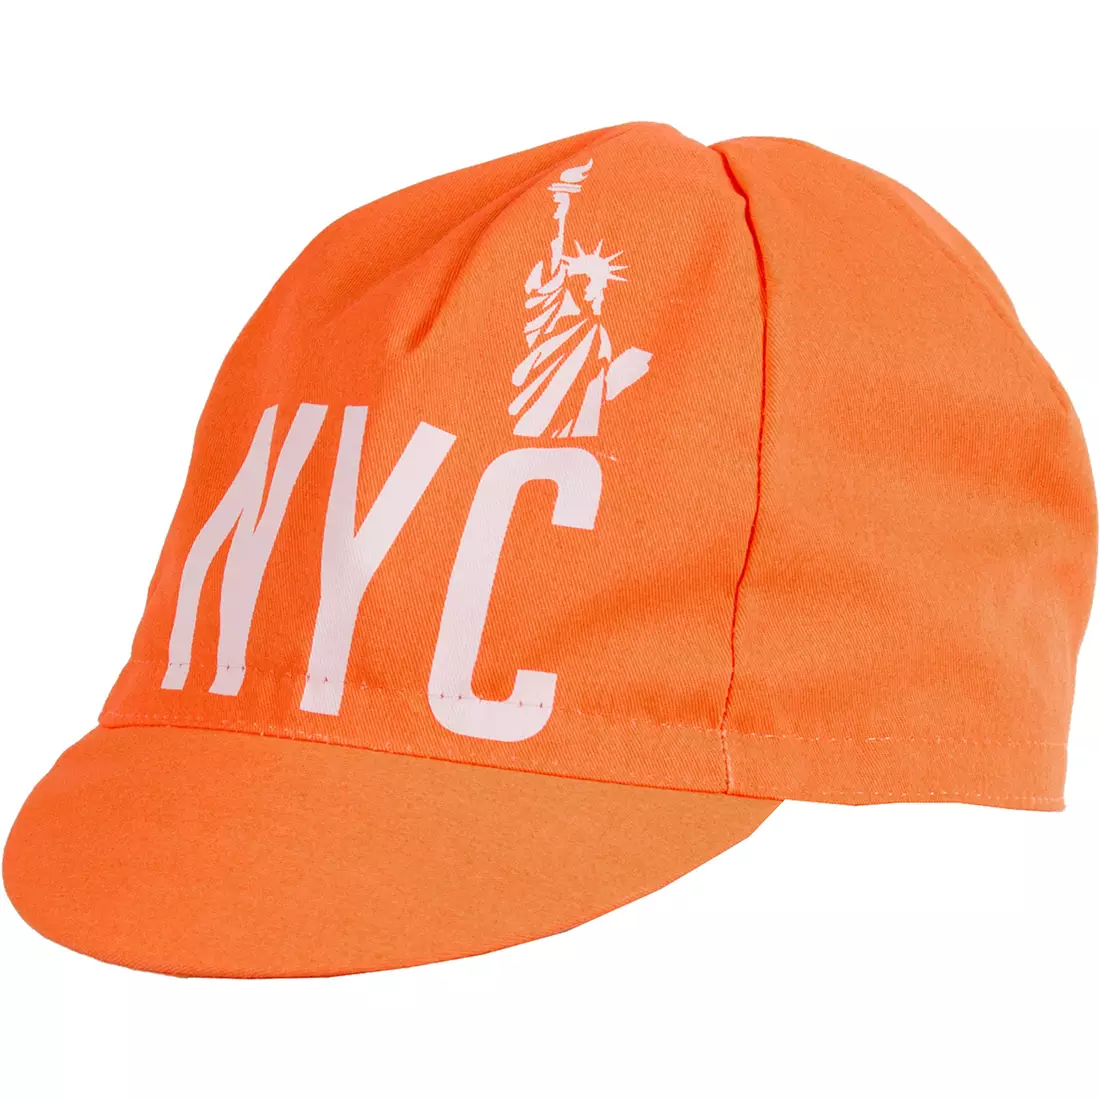 GIORDANA SS18 Radmütze – New York City Liberty – Orange GI-S3-COCA-NYCL-ORAN Einheitsgröße